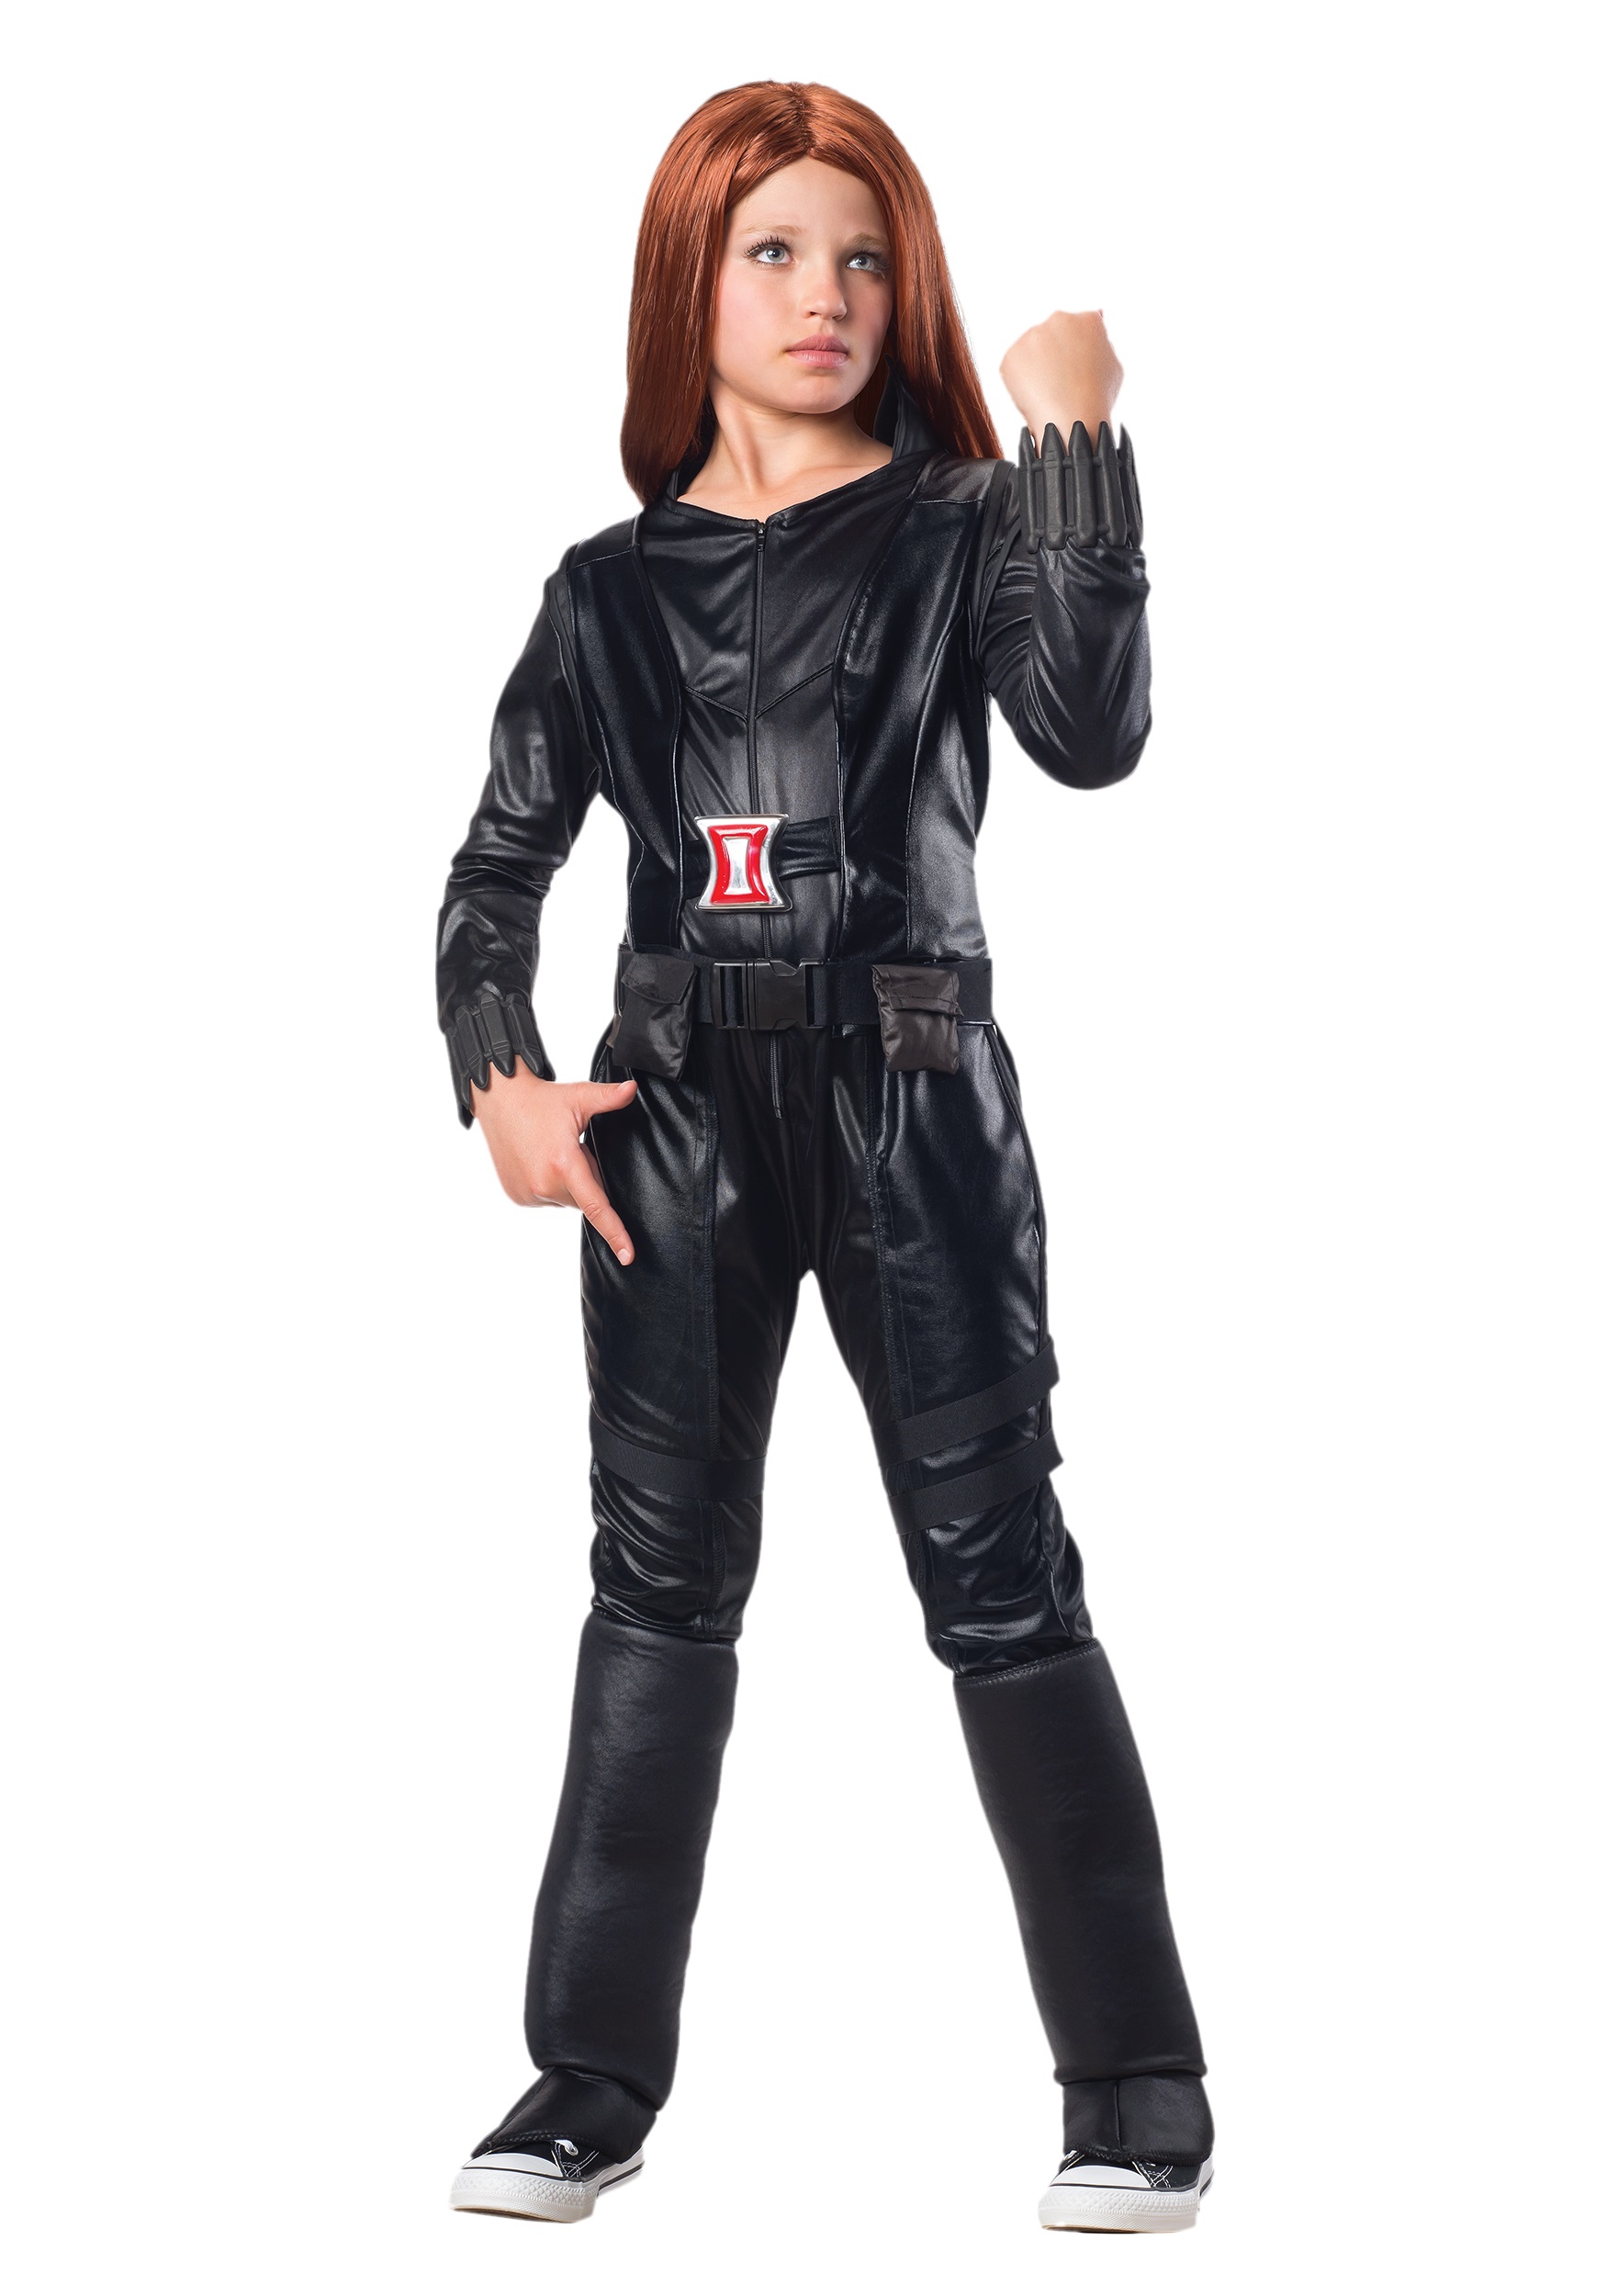 black widow costume